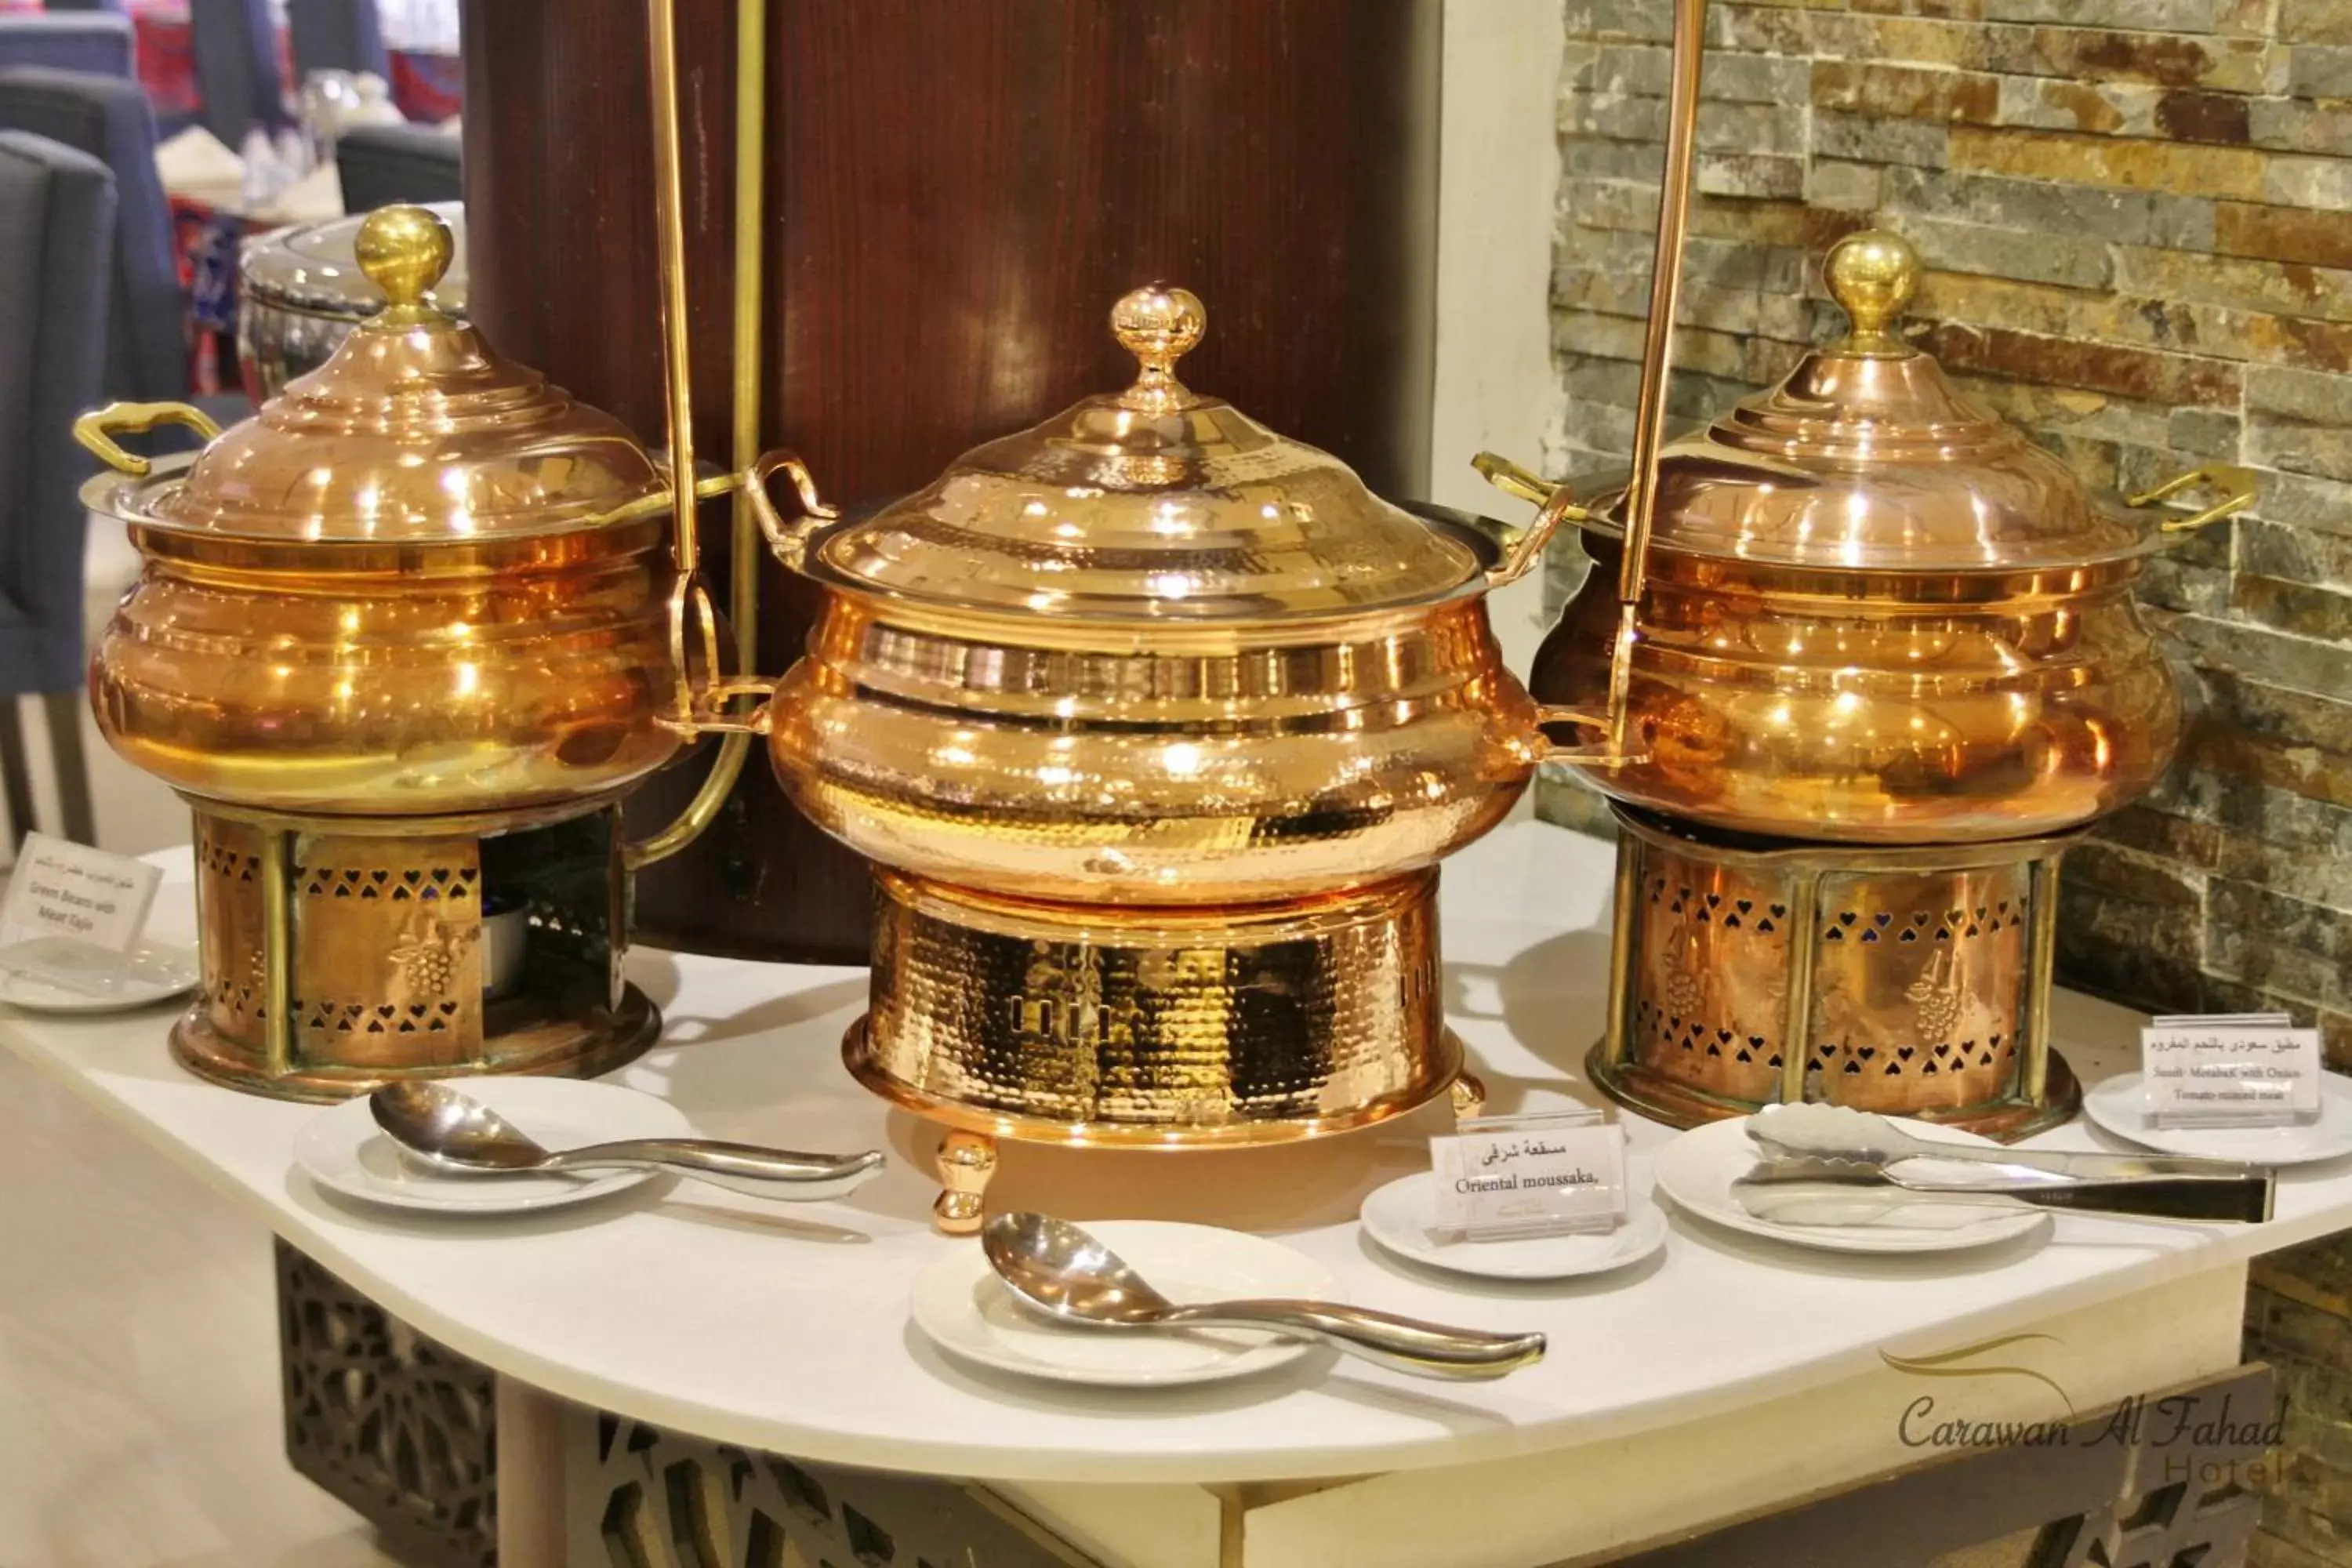 Food close-up in Carawan Al Fahad Hotel